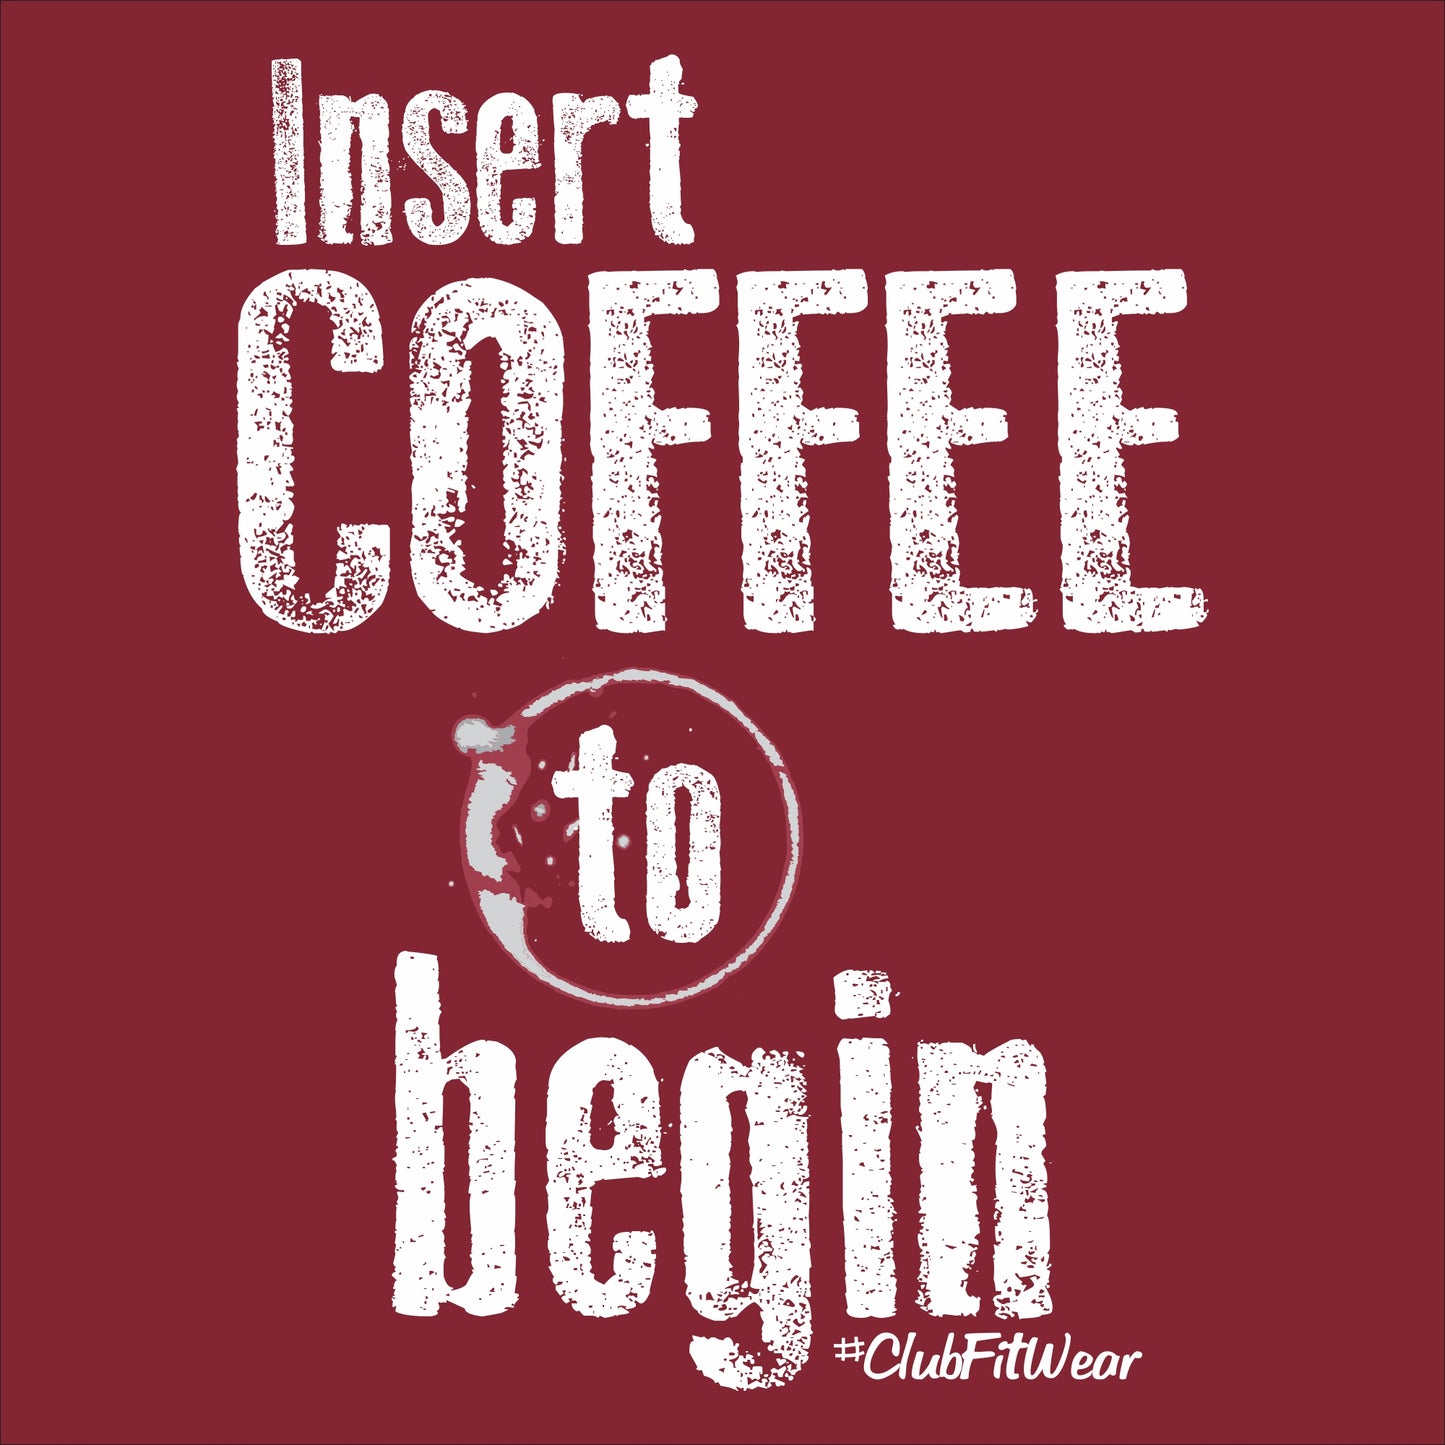 Insert Coffee to Begin